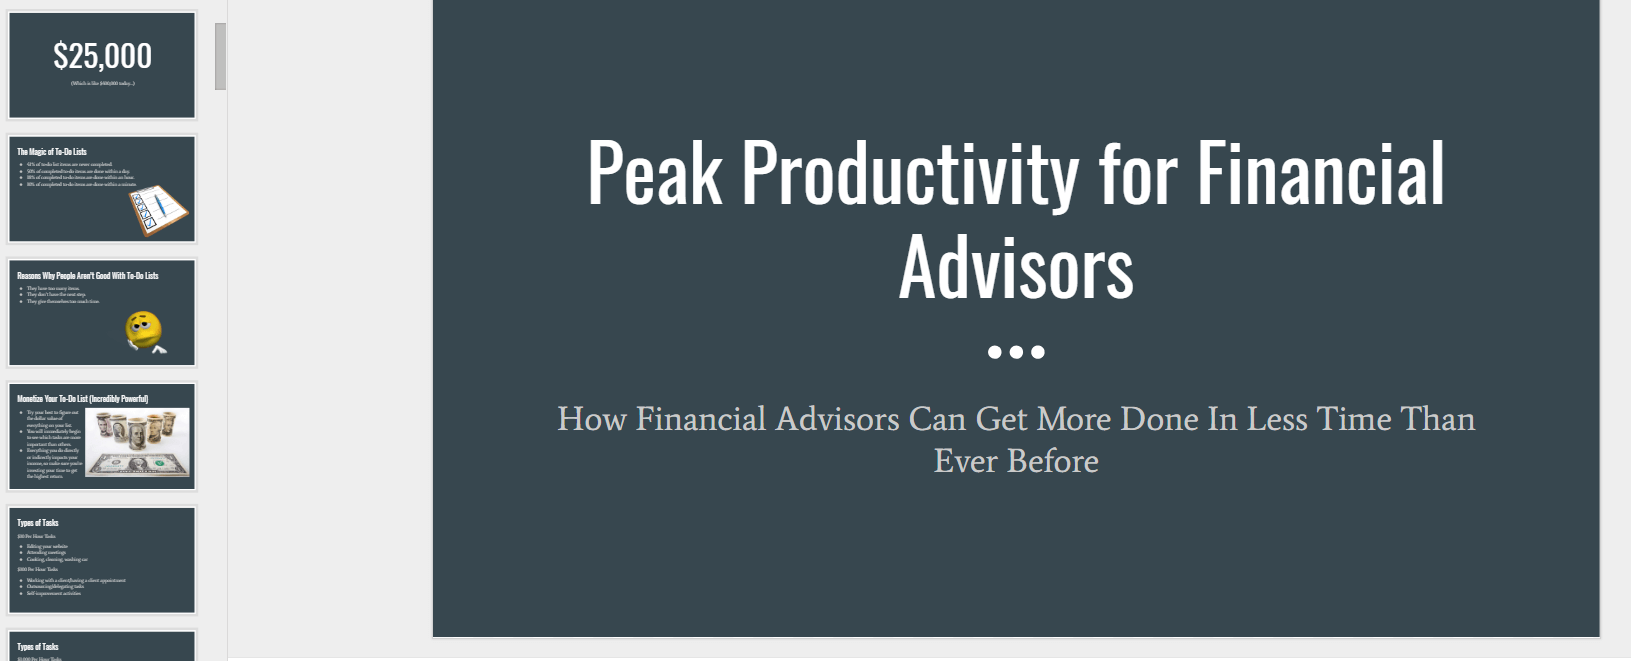 James Pollard - Peak Productivity for Financial Advisors